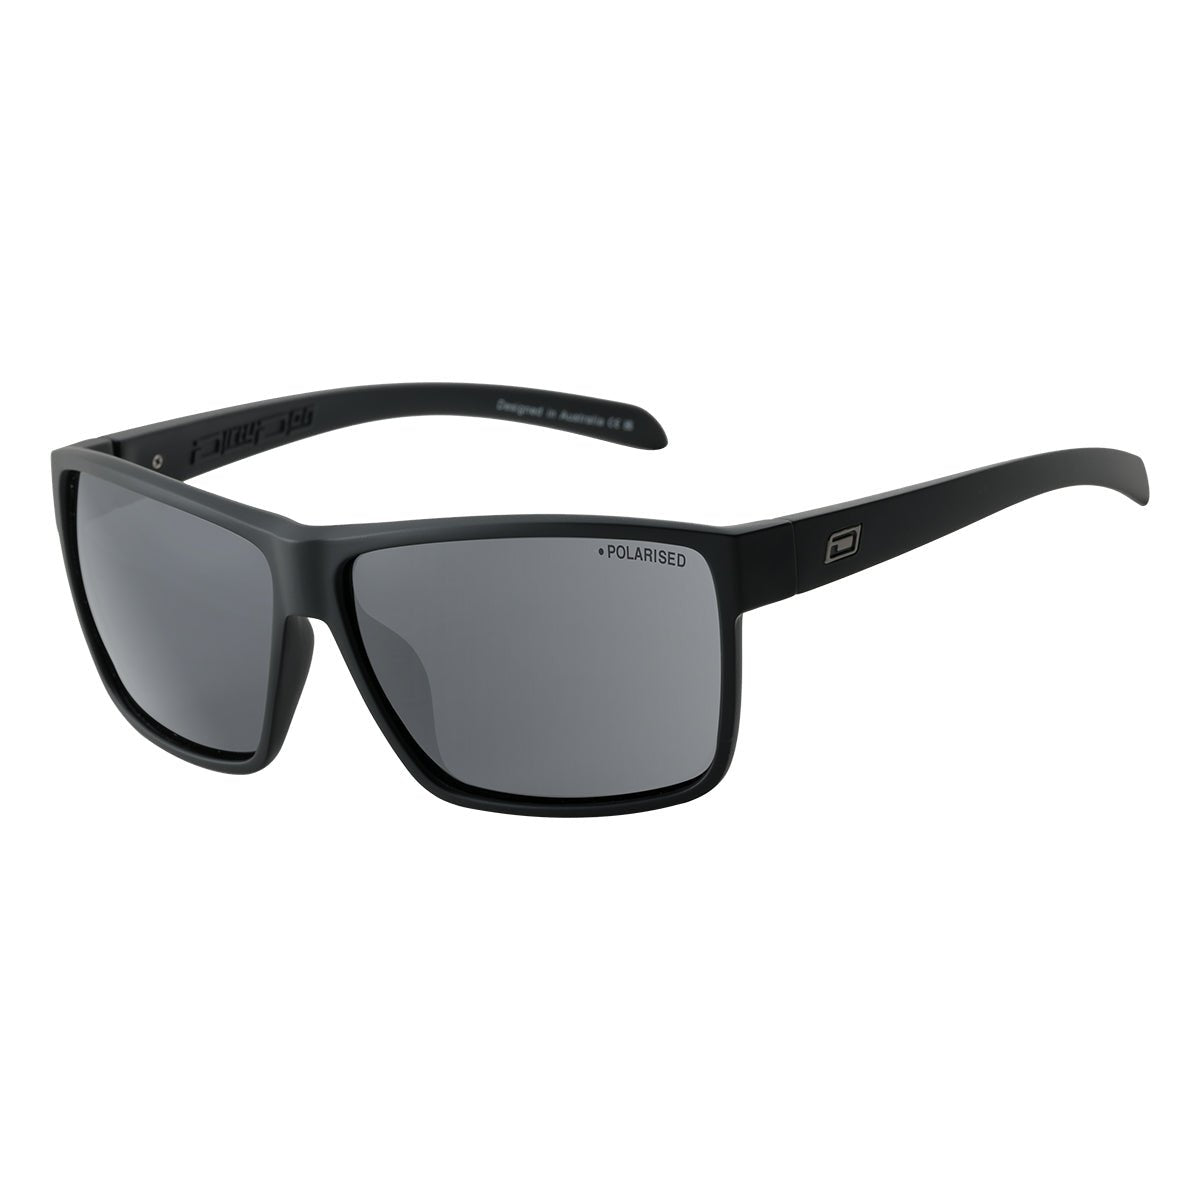 Dirty Dog Rackateer Sunglasses - Worthing Watersports - 53728 - Sunglasses - Dirty Dog